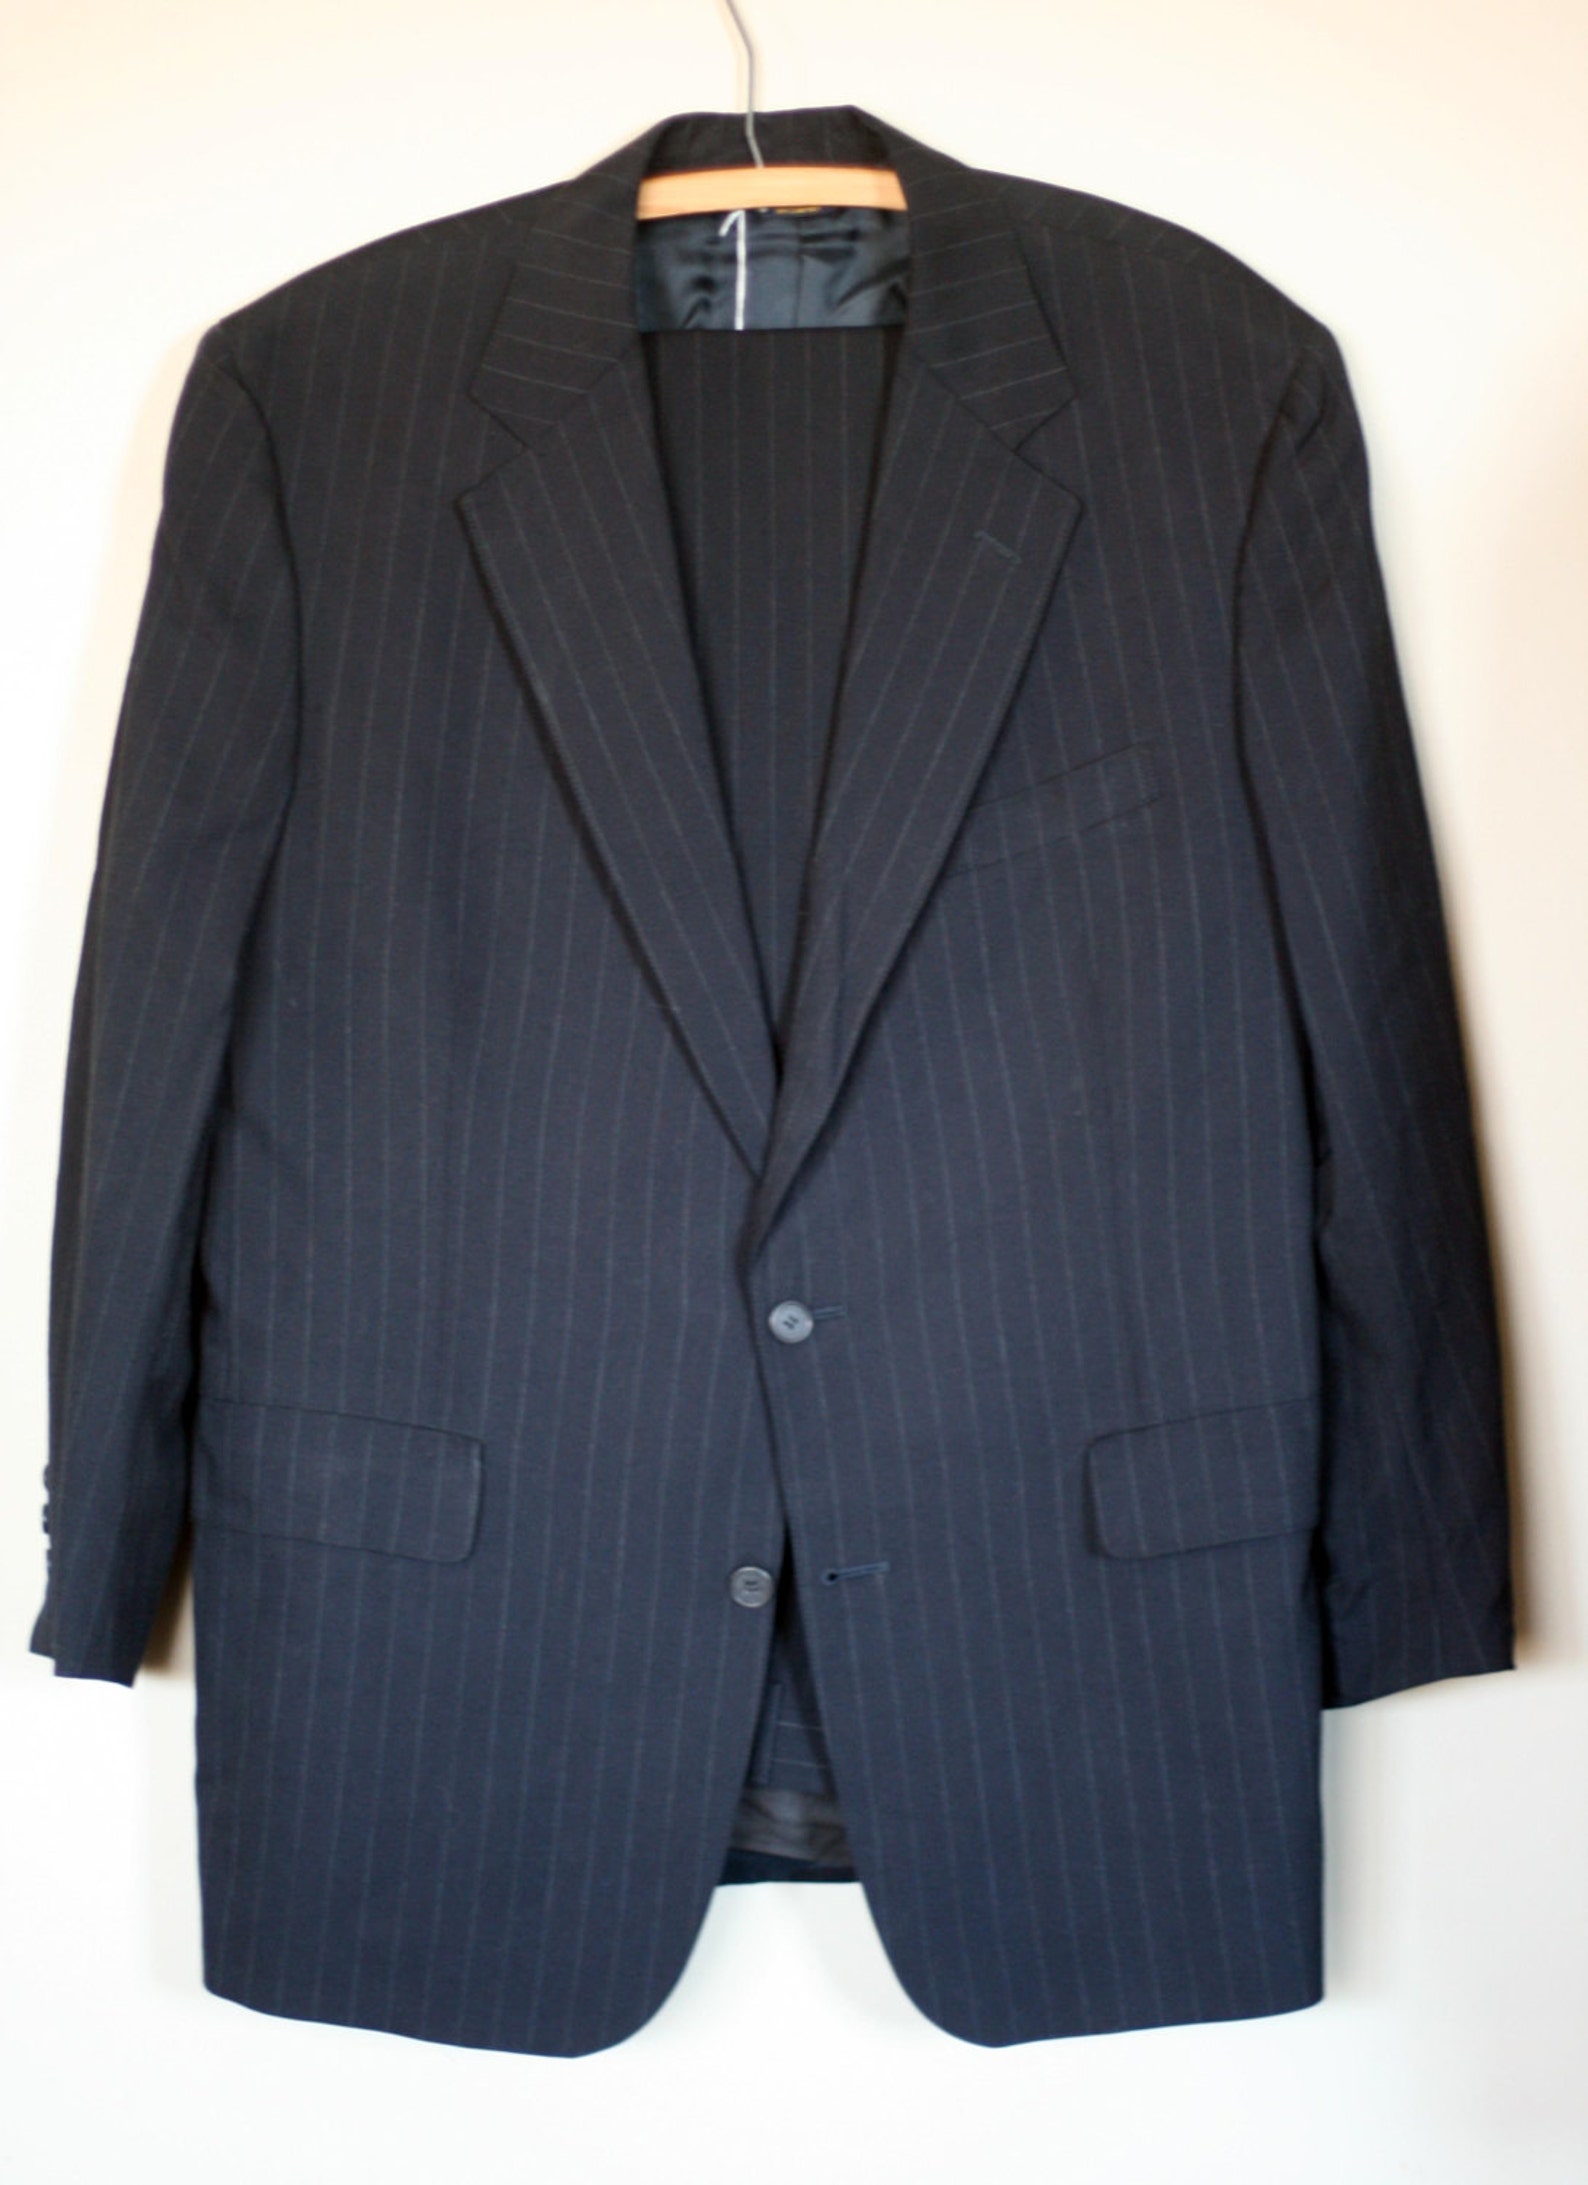 Vintage brooks brothers suit black pinstripe wool size 42 | Etsy